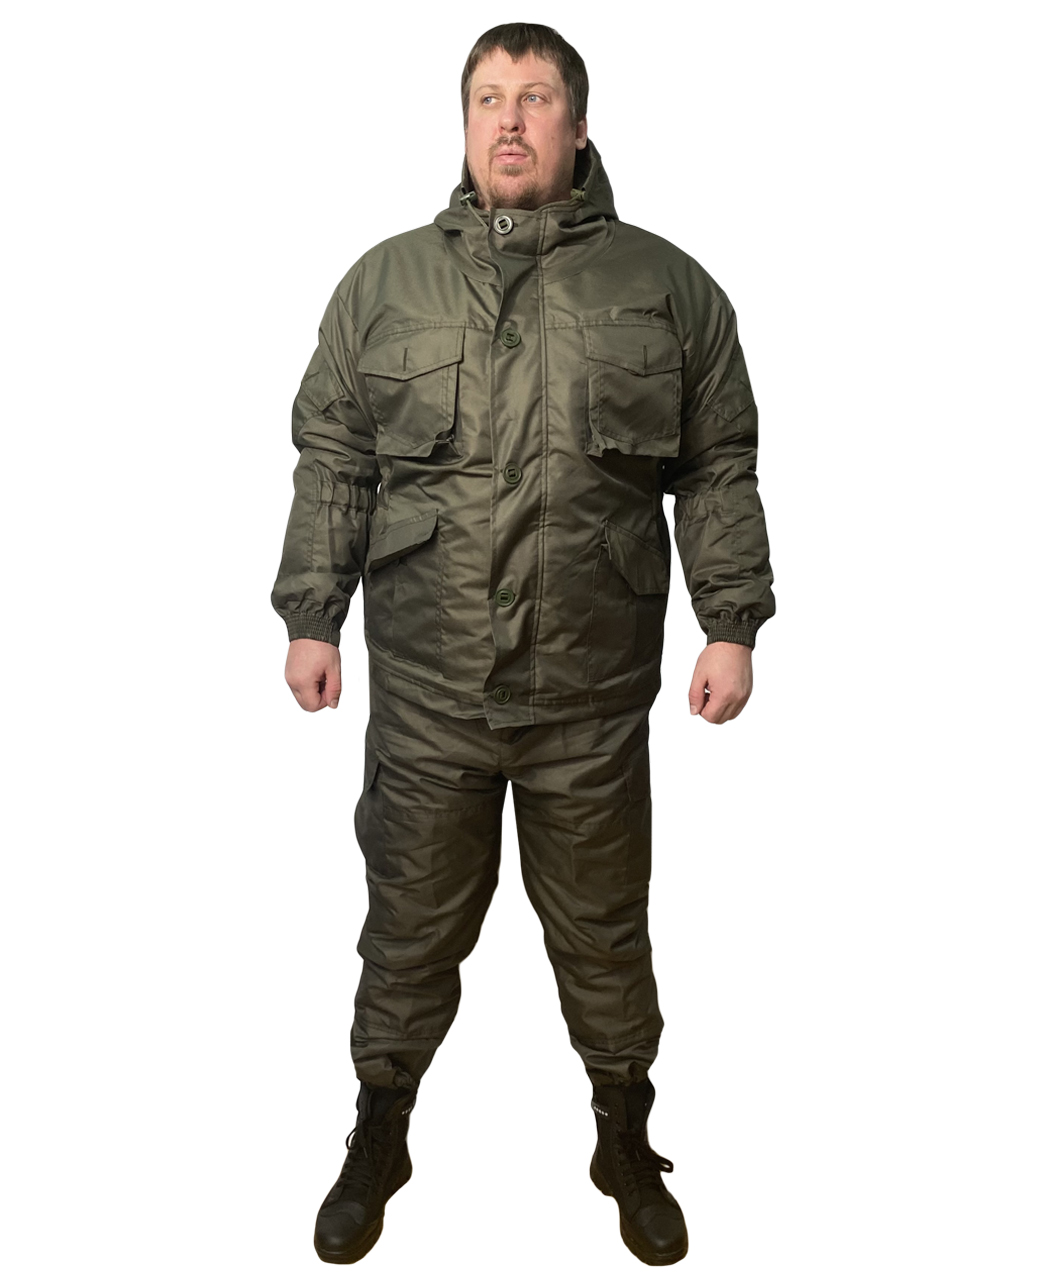 Демисезонный костюм Горка-8 премиум рип-стоп цвета олива